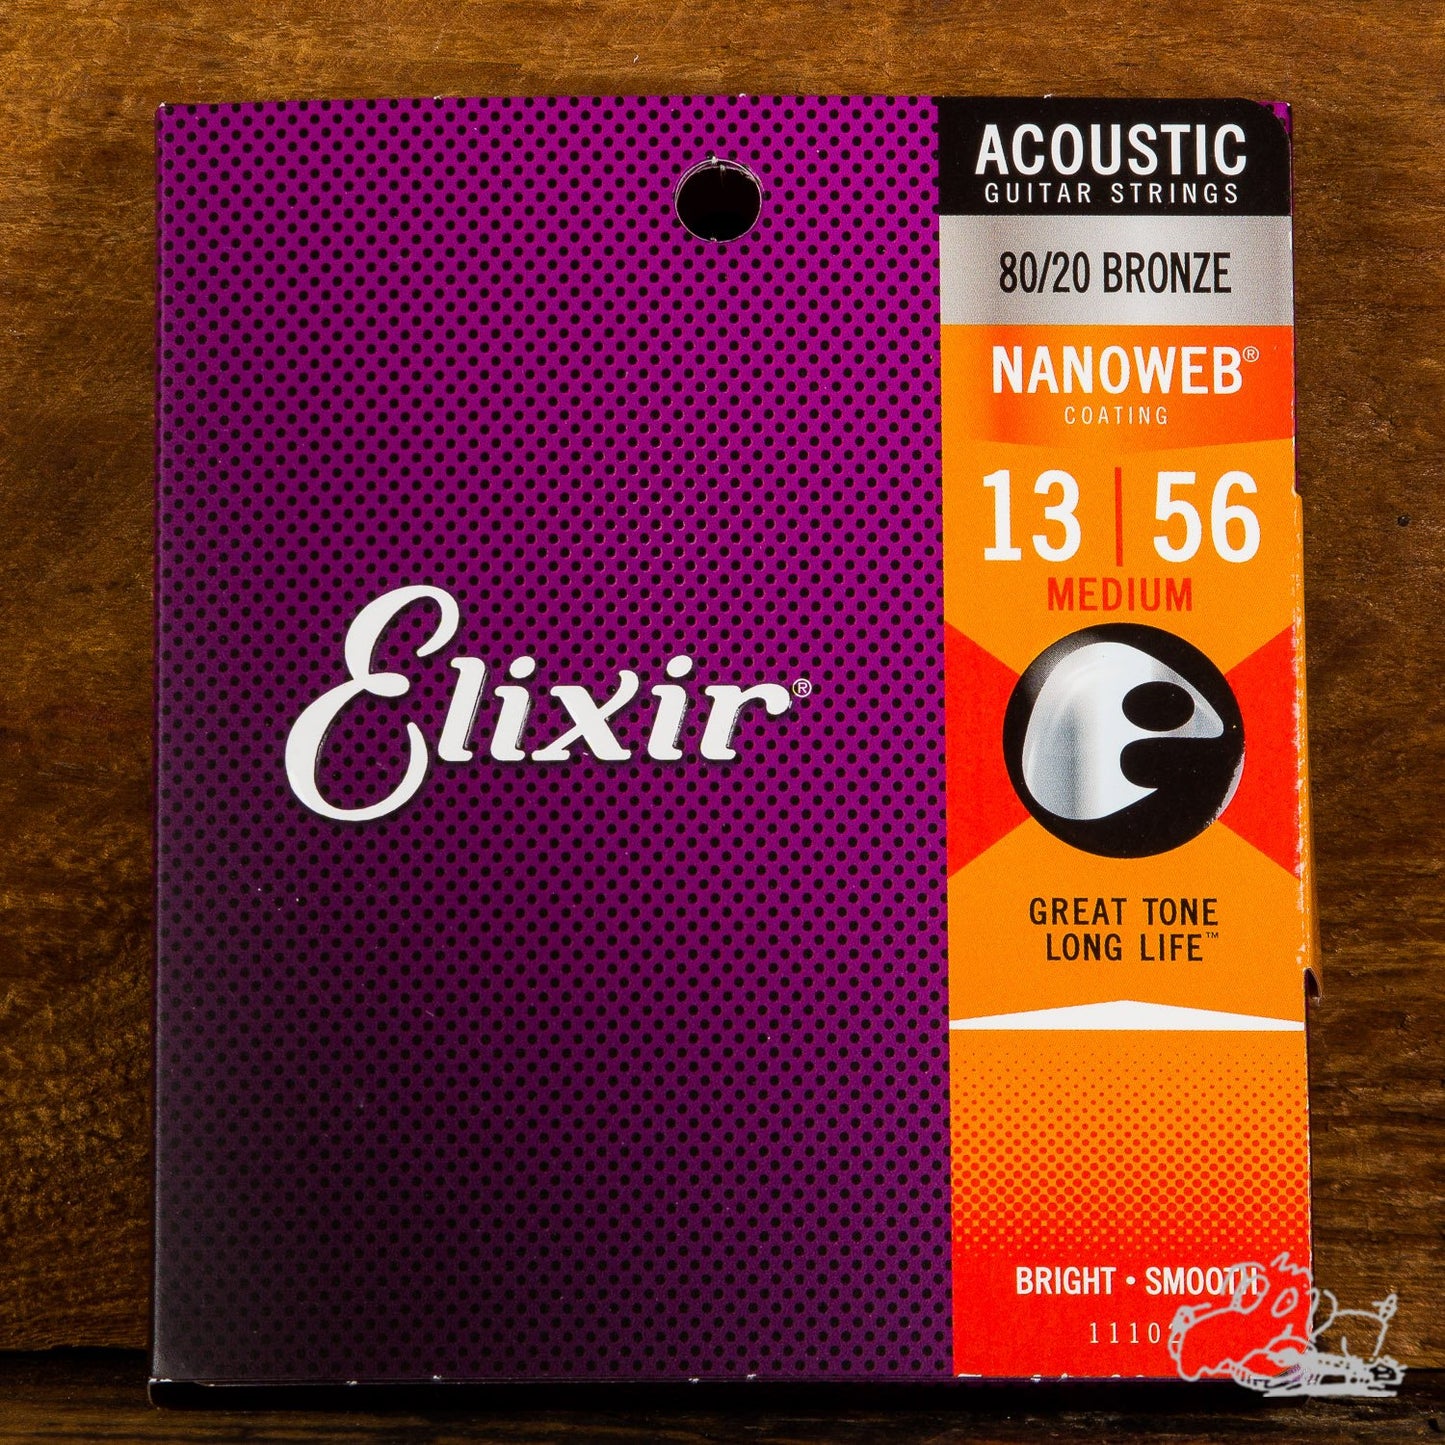 Elixir Nanoweb Coating Acoustic Guitar Strings Medium 13-56 80/20 Bronze